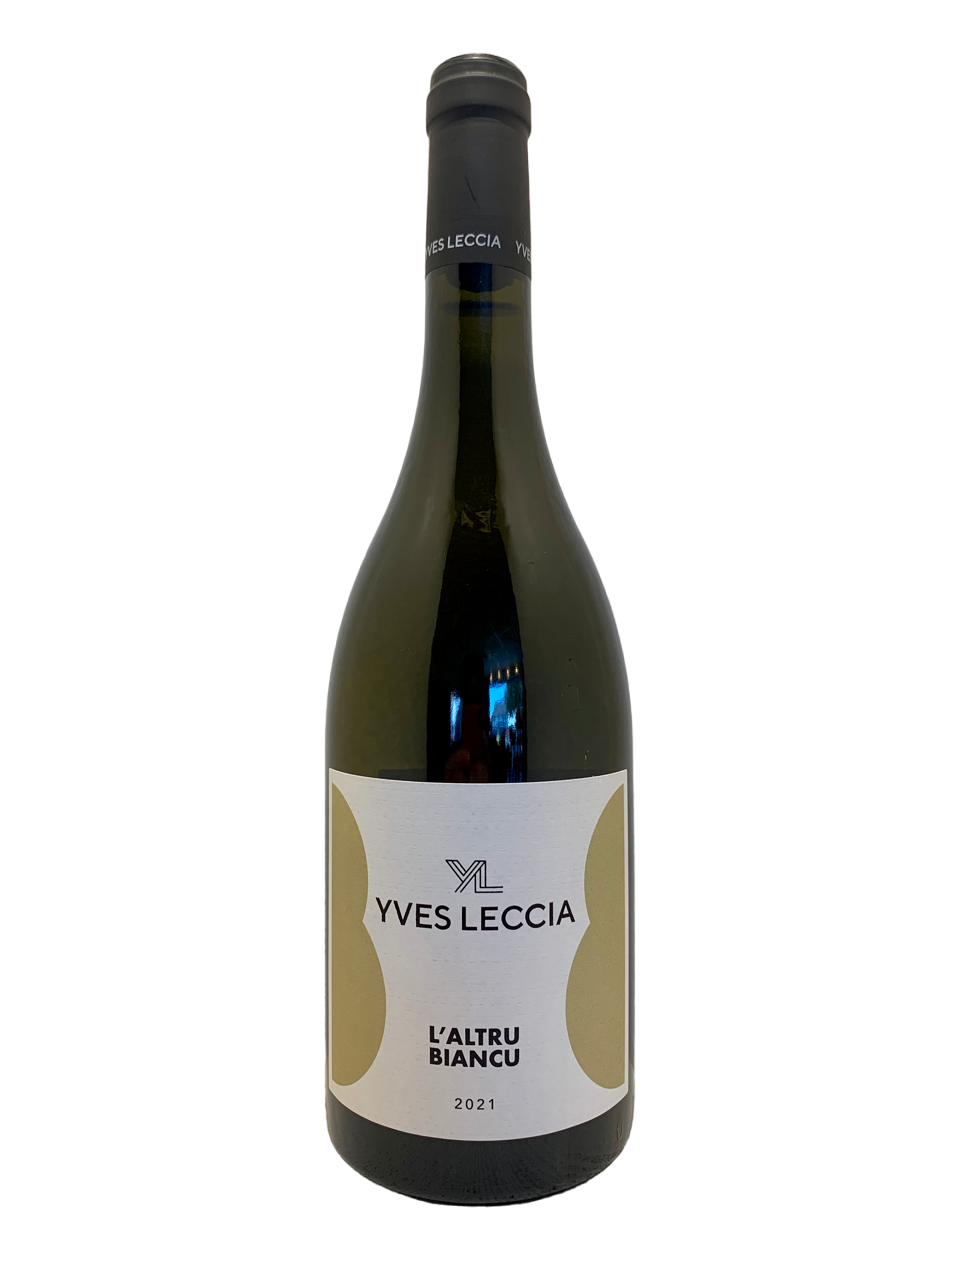 vin de corse corsica wine organic biodynamie yves leccia patrimonio igp île de beauté l'altru biancu blanc bianco gentile